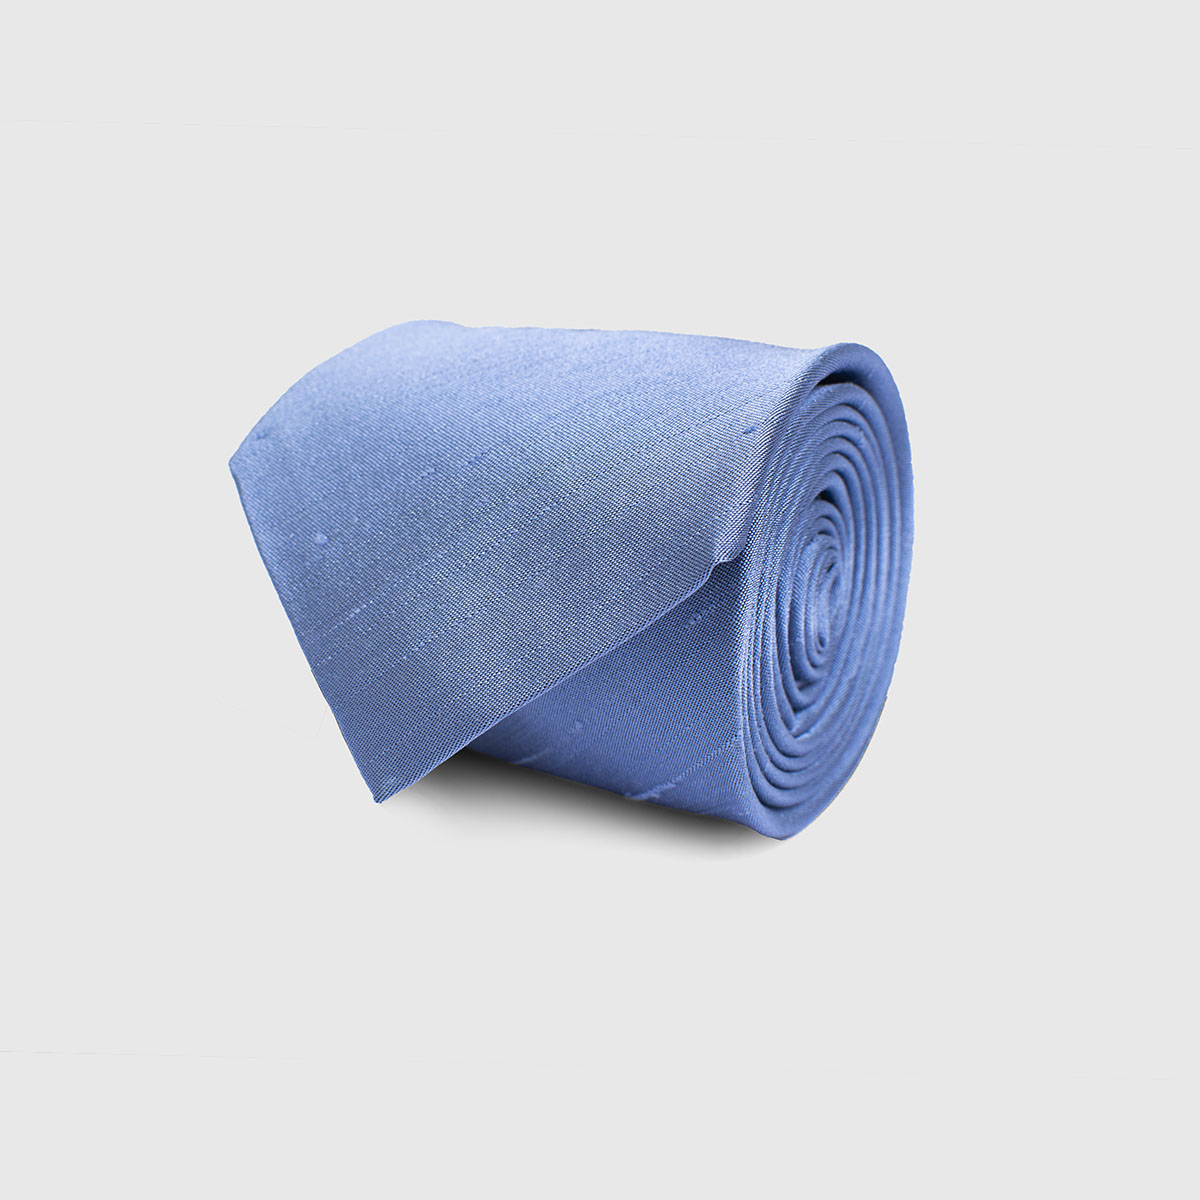 5-Fold Tie light blue